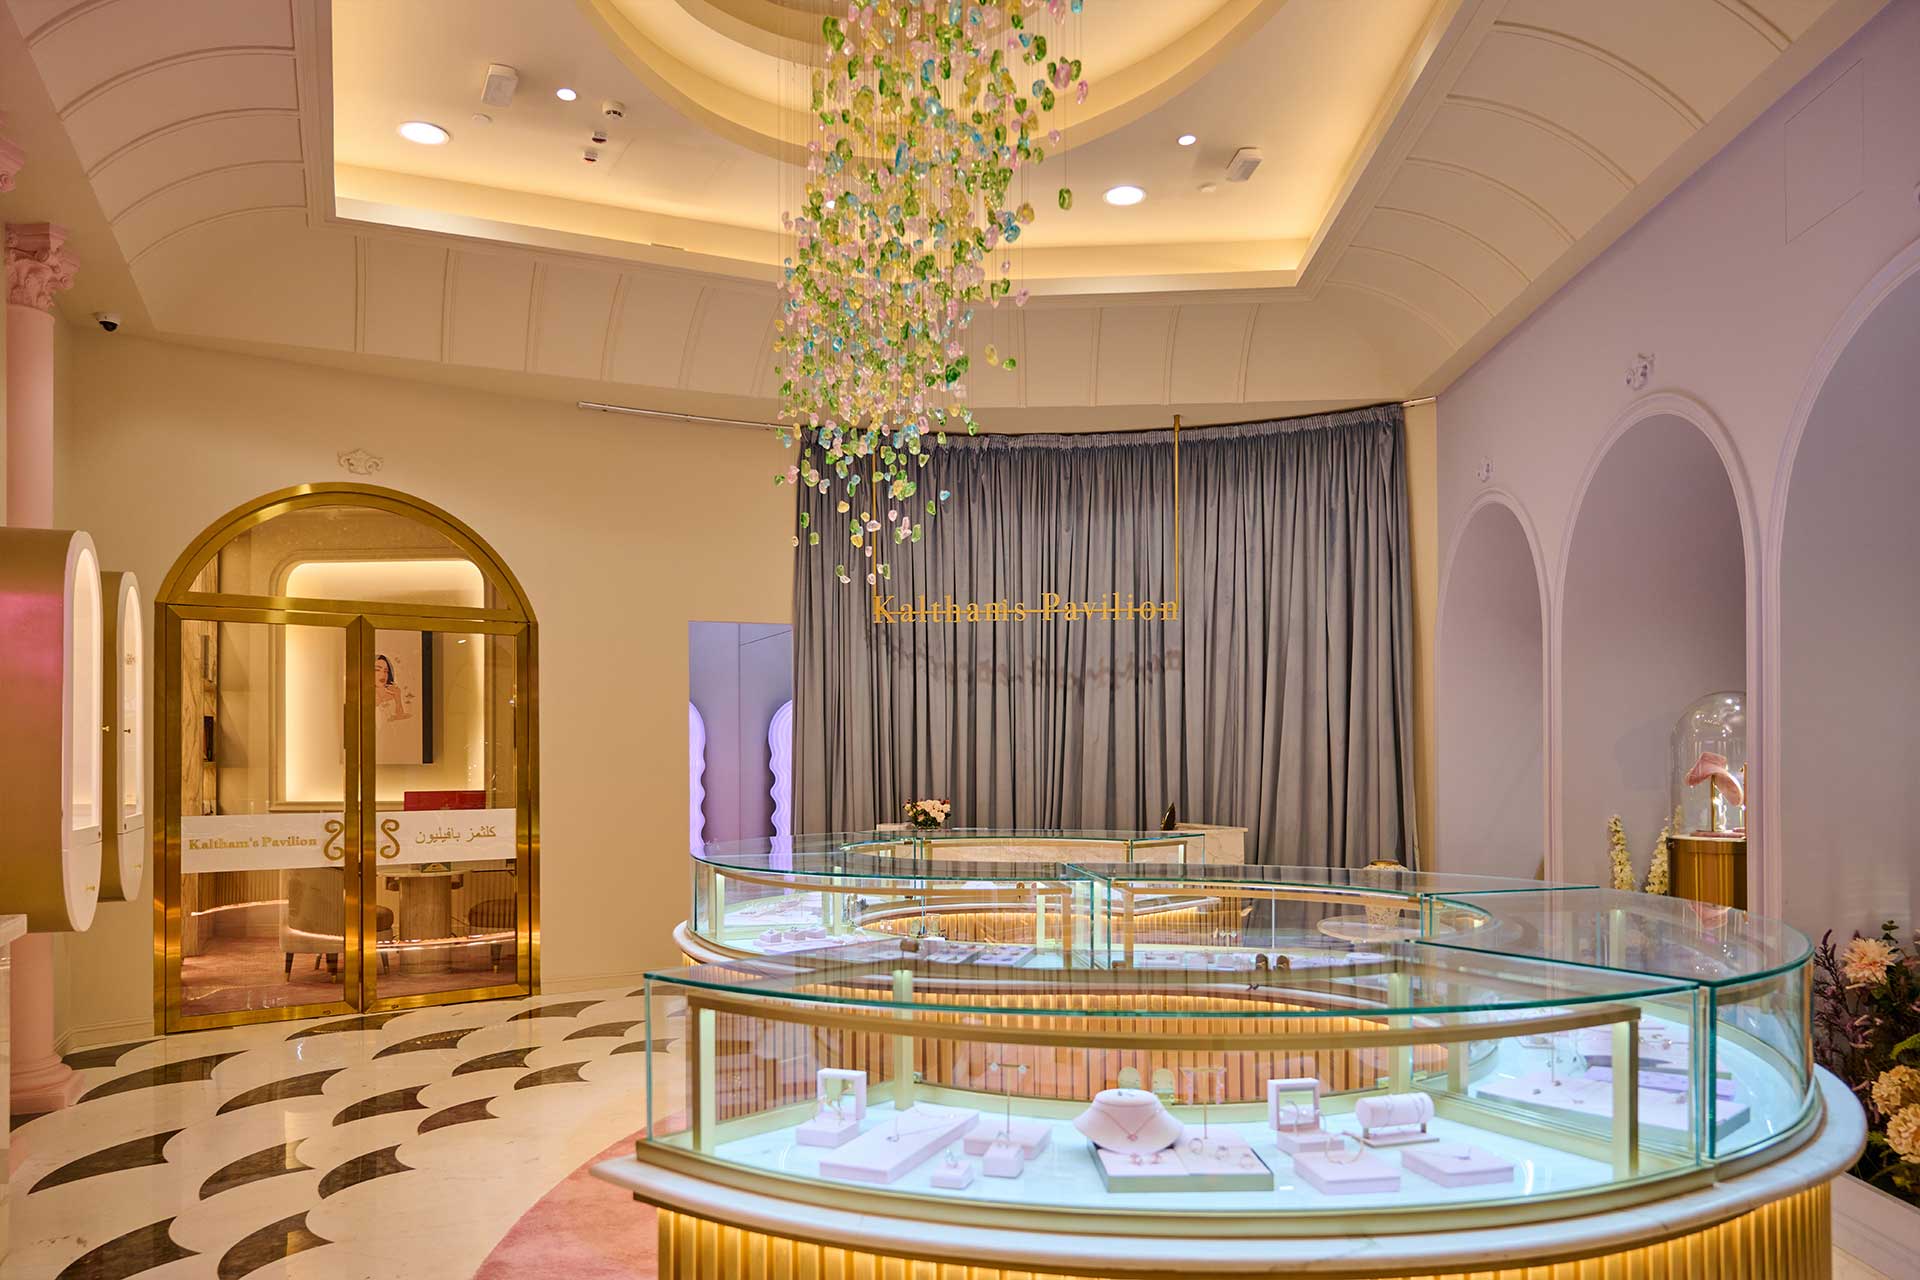 Luxurious ambiance of Klatham's Pavilion, Vendome Mall, Qatar - Image 6